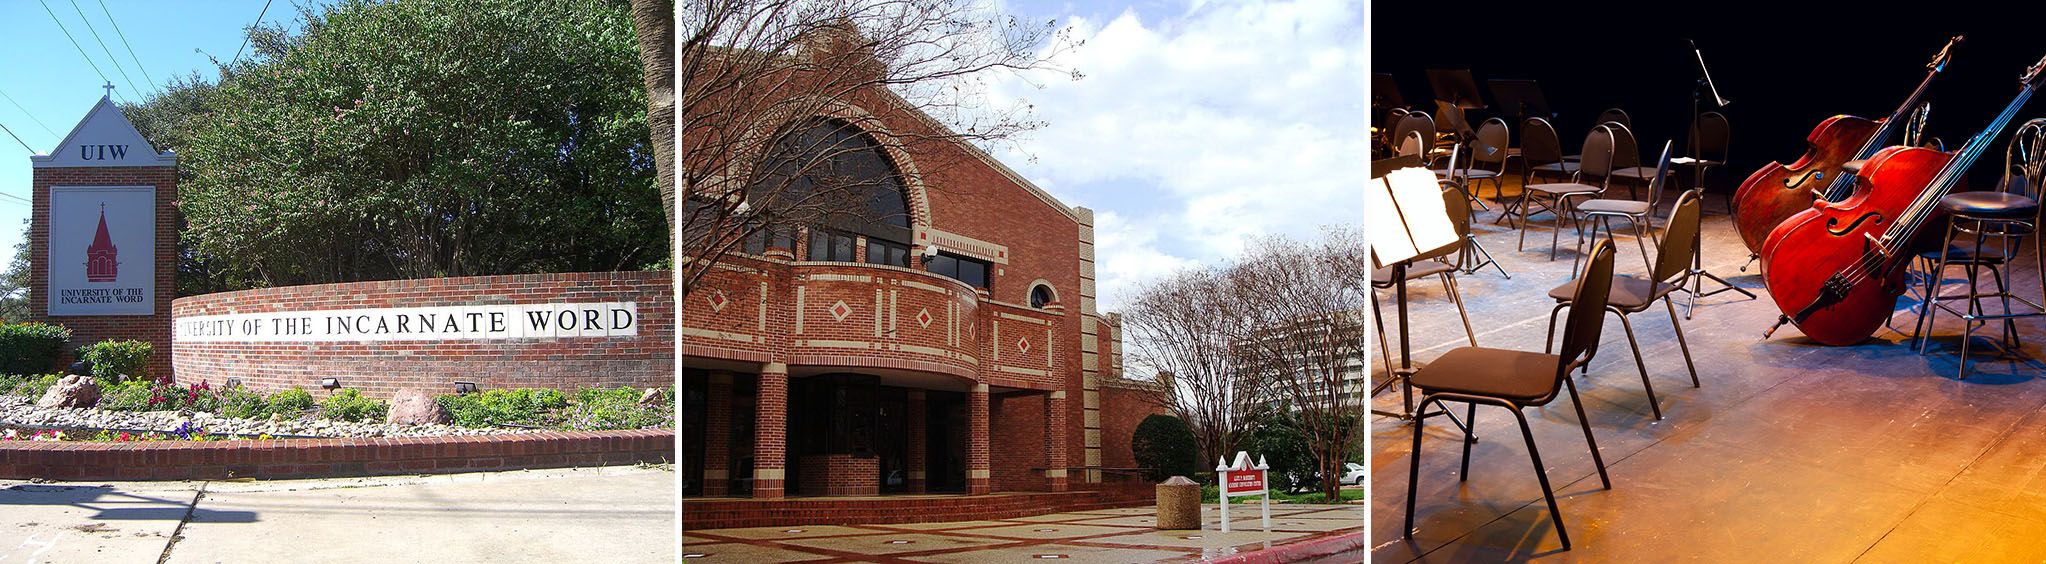 University of the Incarnate Word Concert Hall in San Antonio